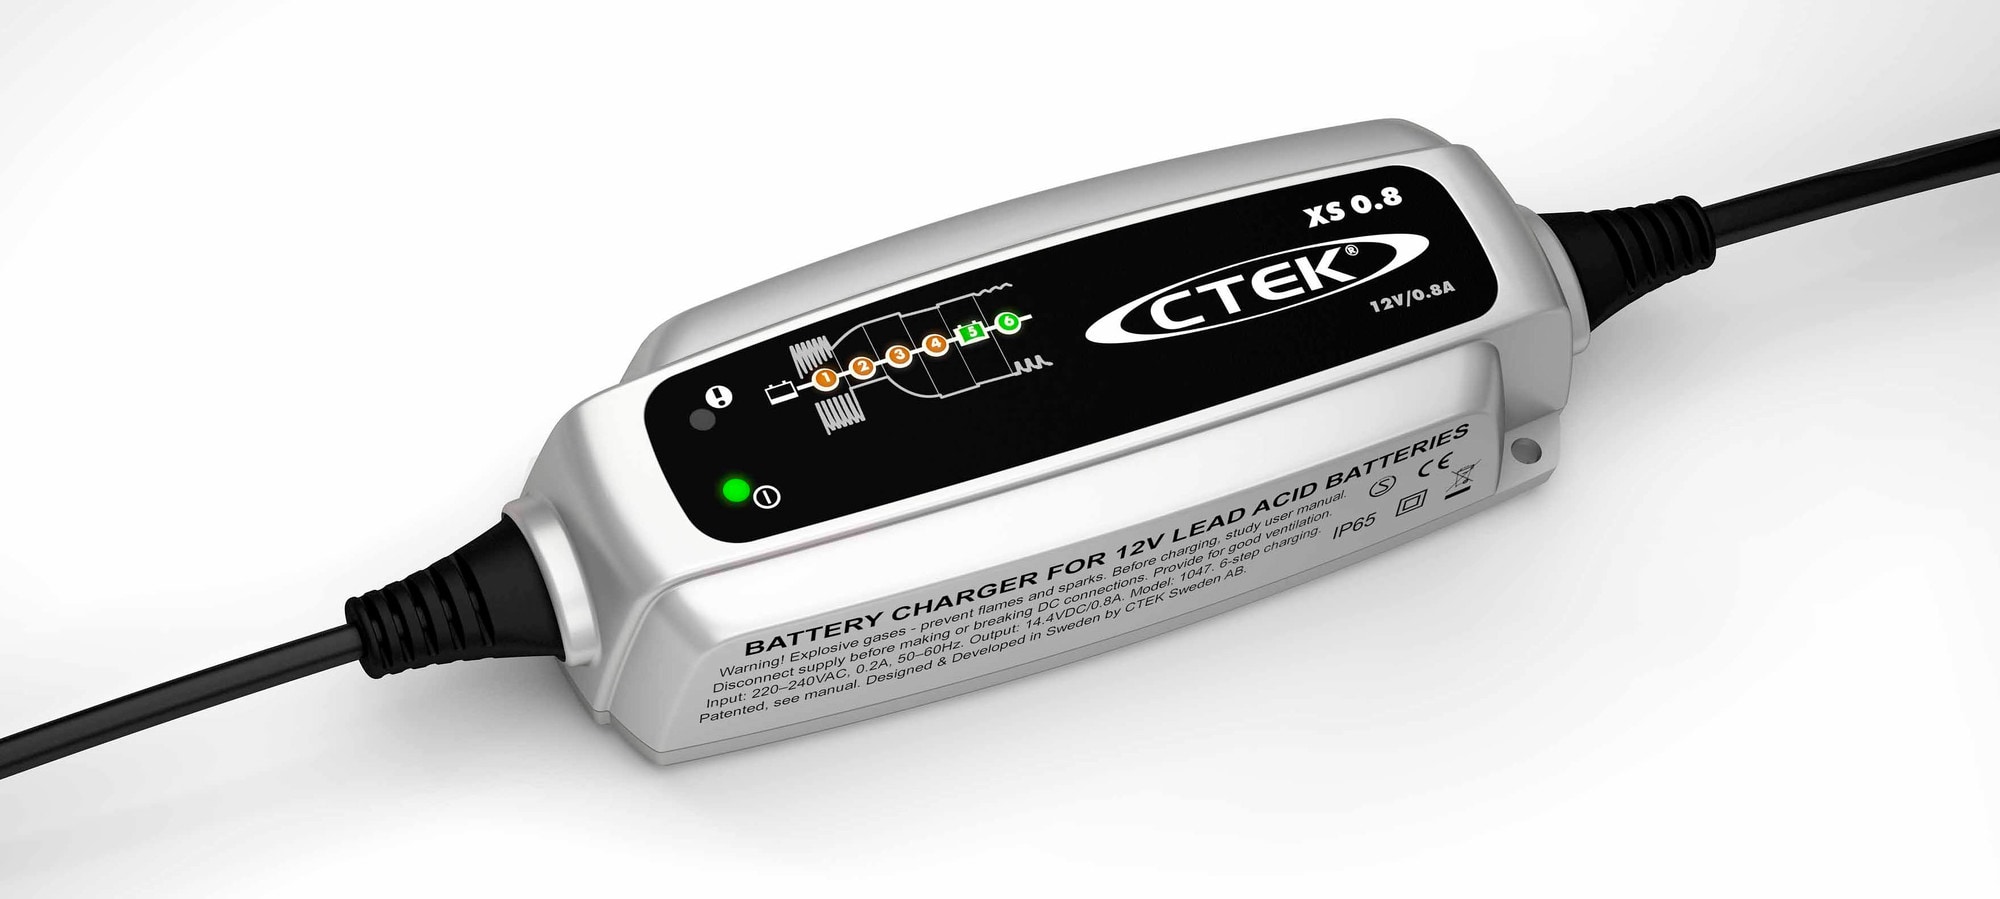 Ctek Lader XS 0.8 EU - Elkjøp